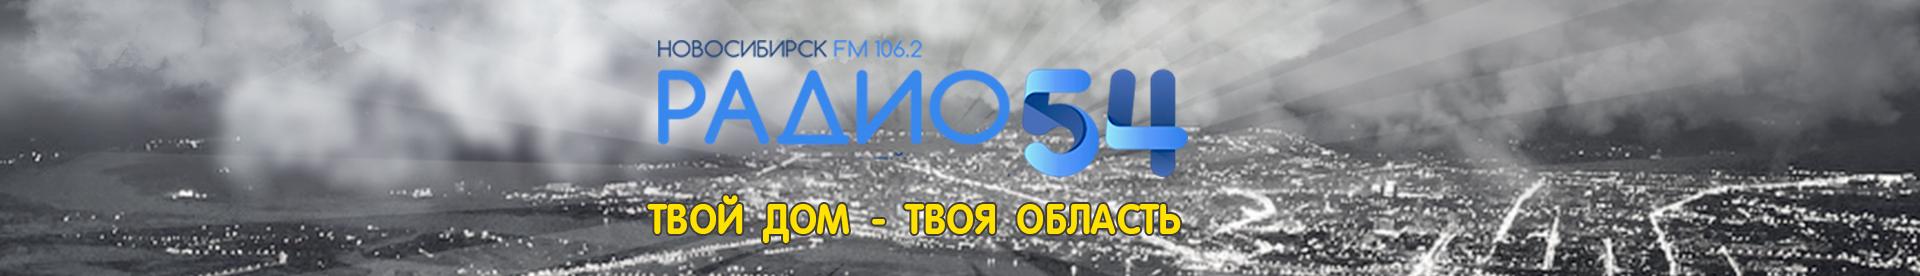 Радио 54 новосибирск 106.2. Радио 54 Новосибирск. Радио 54 Новосибирск логотипы. Радио 54 Новосибирск волна.